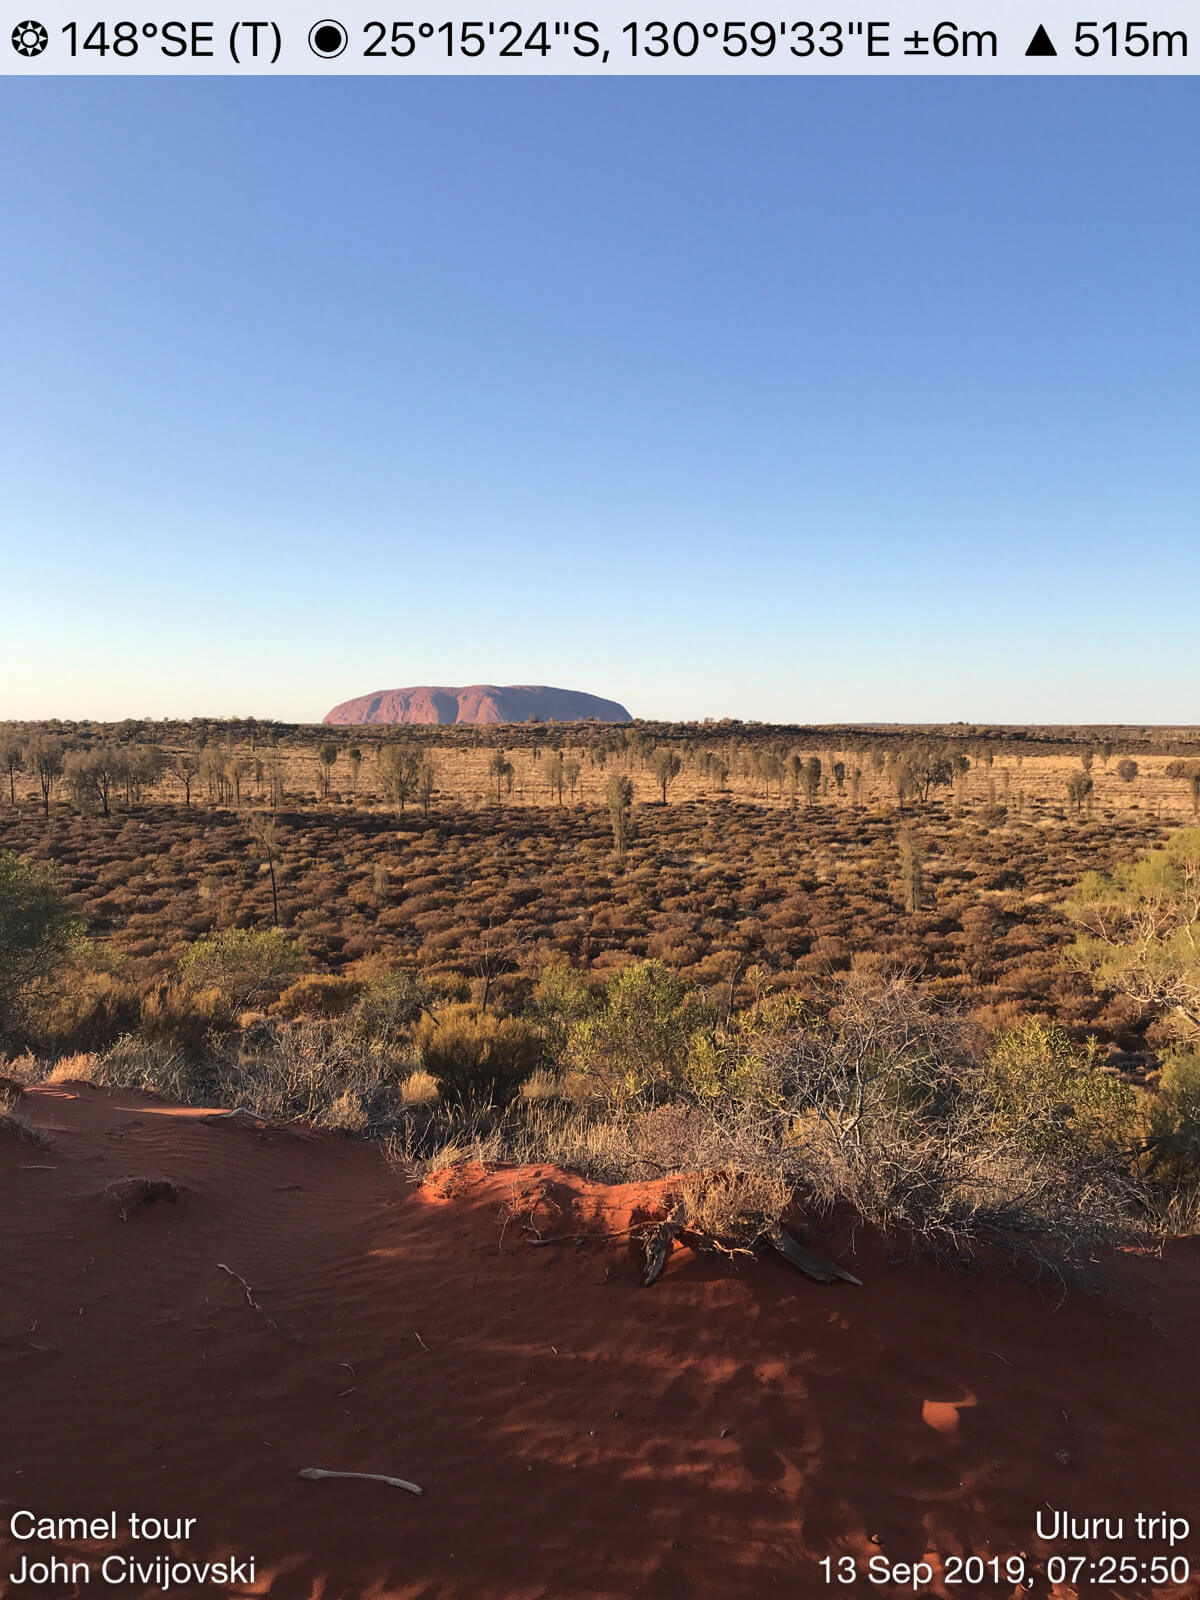 Red soil and shrubs at Uluru.